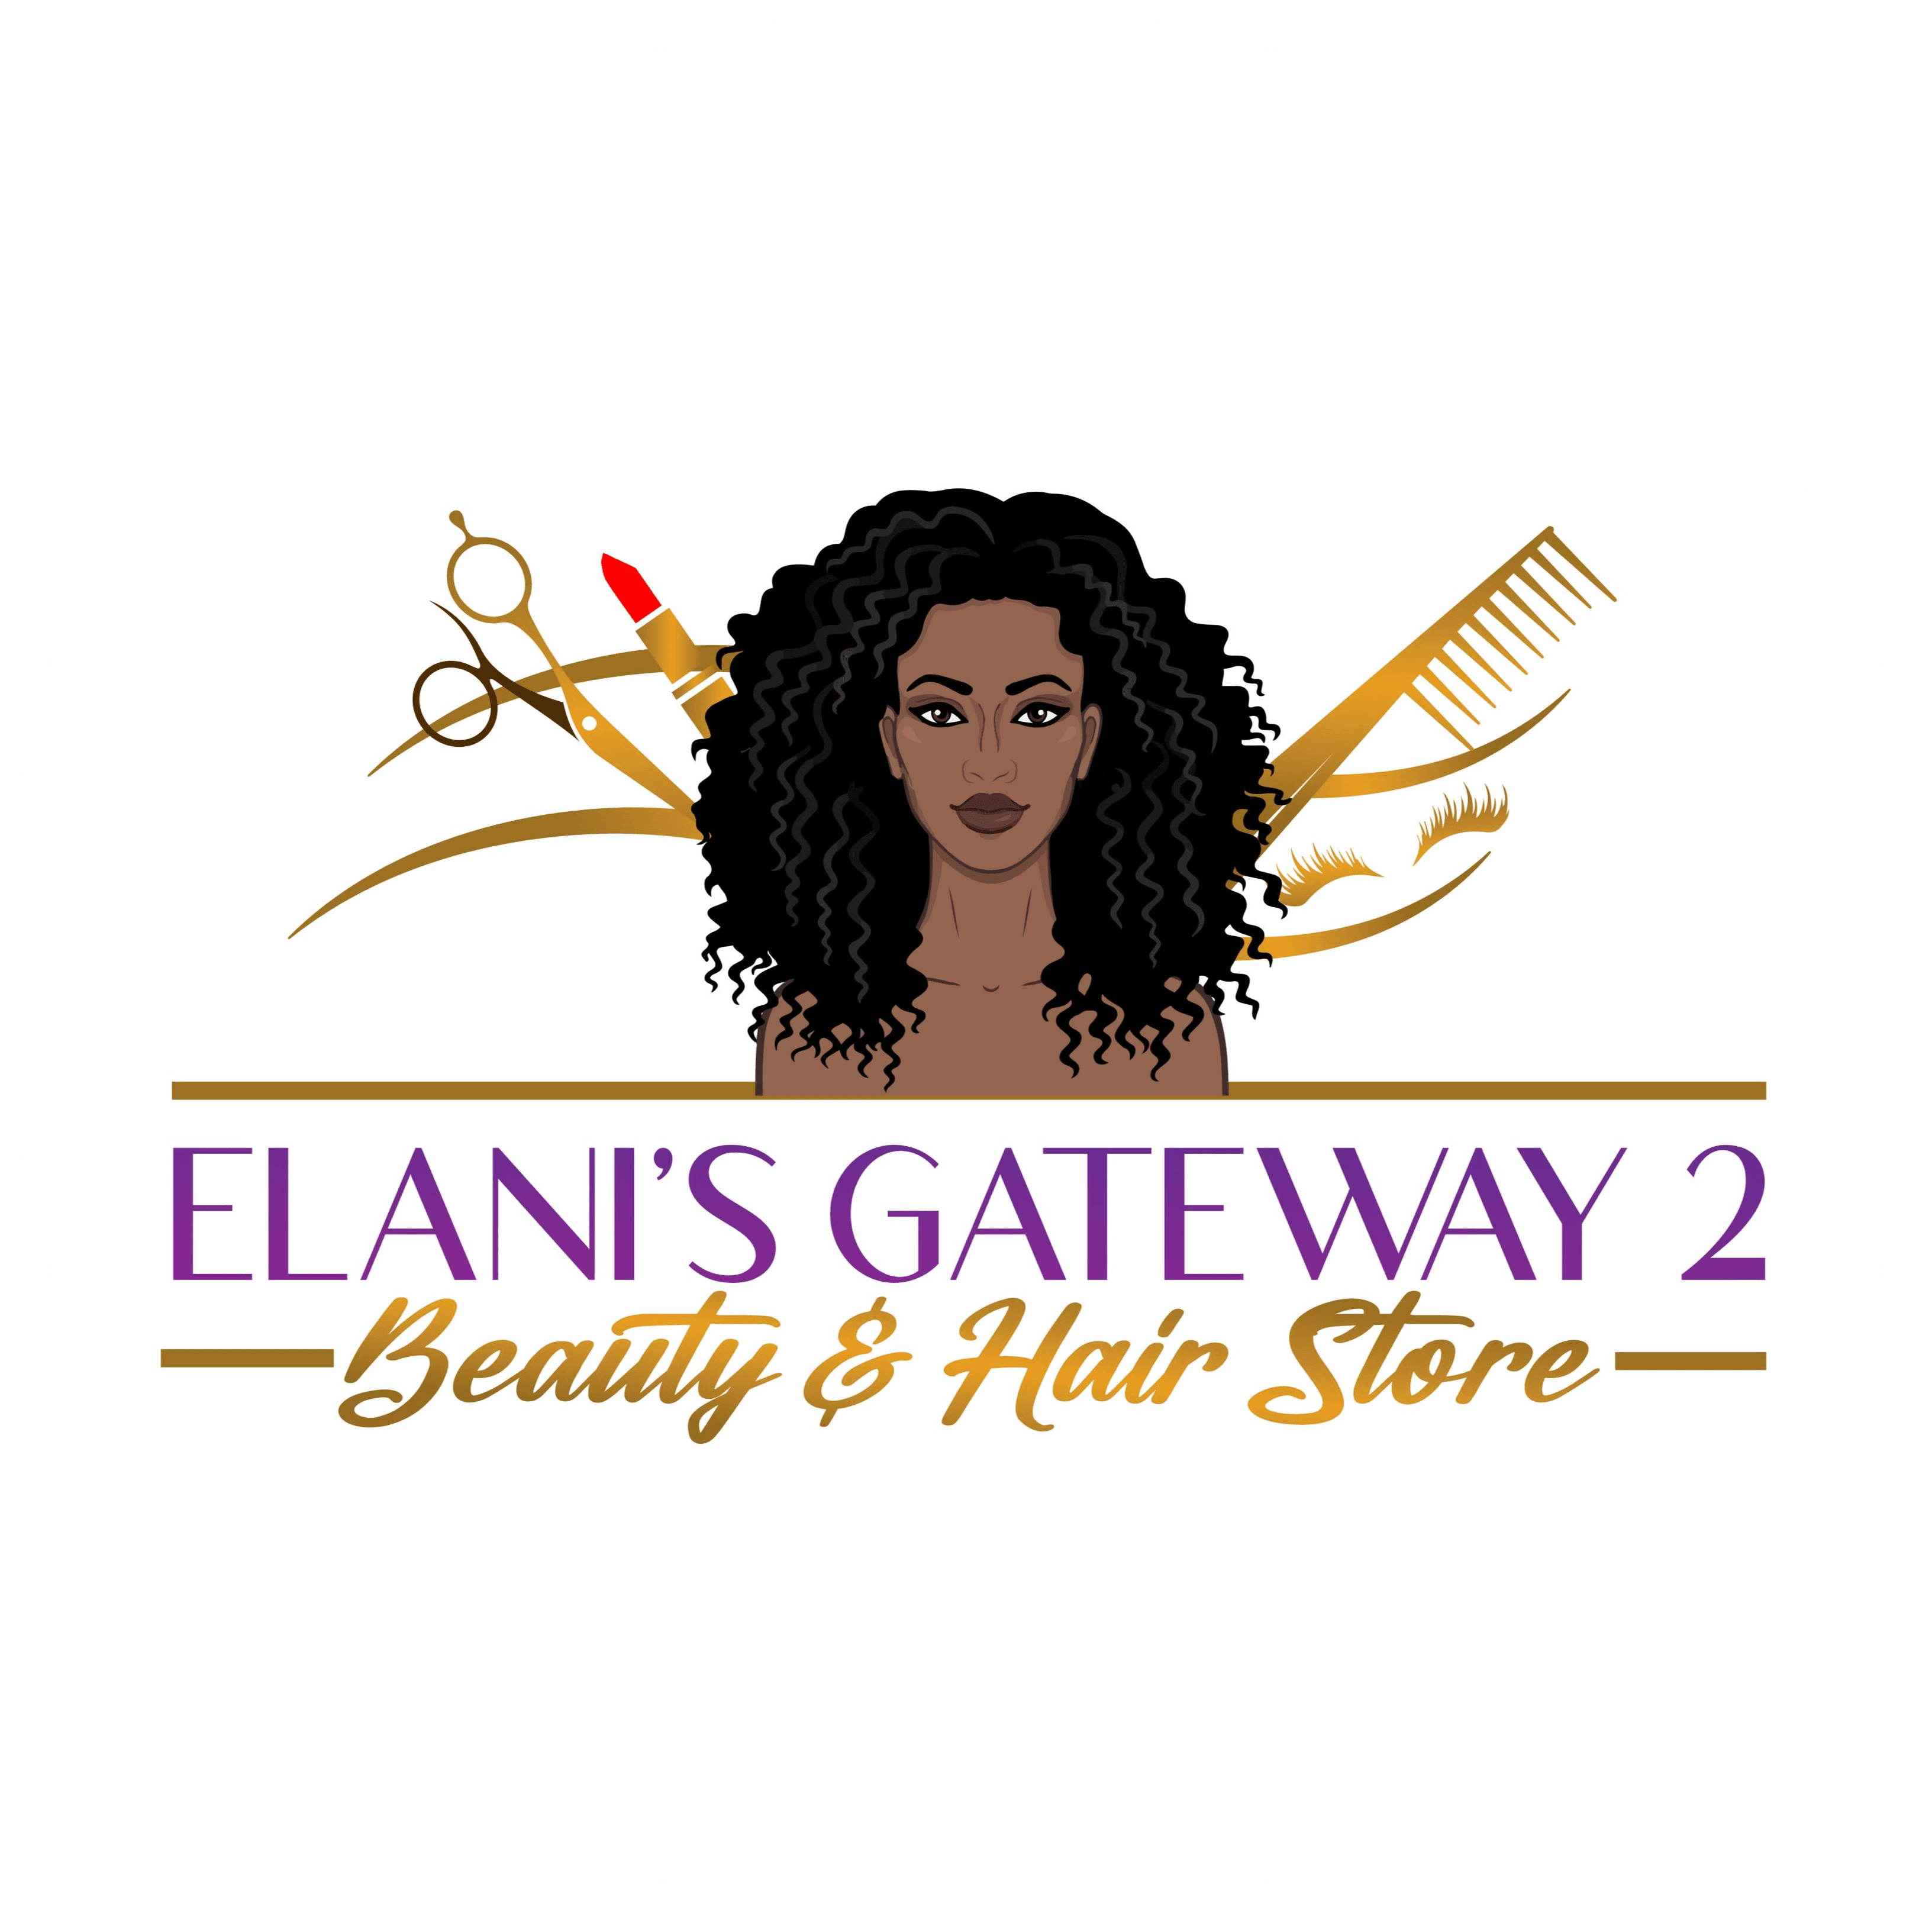 Elani’s Gateway 2 Beauty & Hair Store